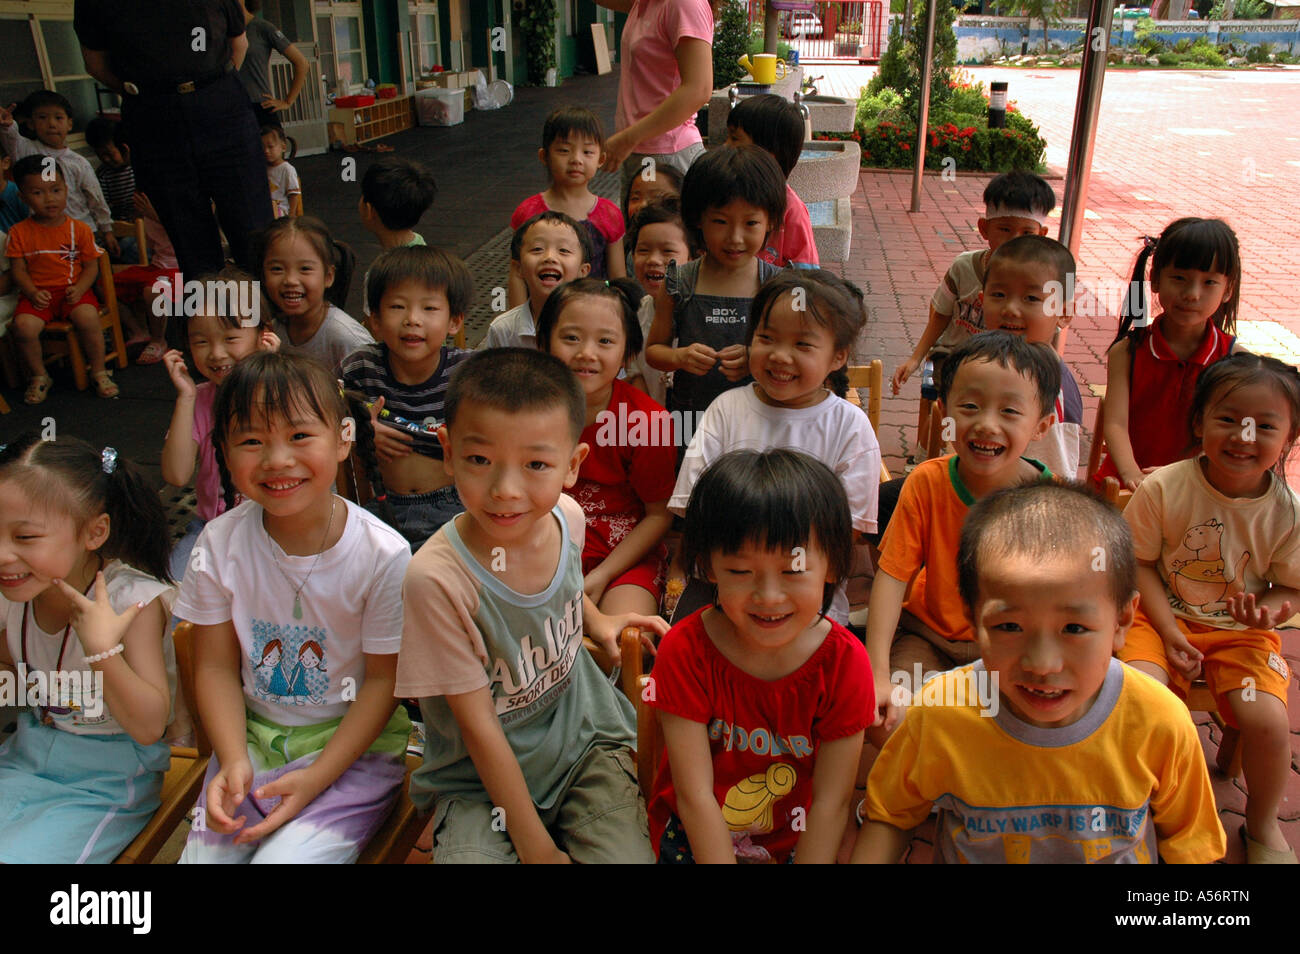 Painet ja0810 taiwan school children kids special needs tainan photo 2004 asia china chinese child kid mental problem play Stock Photo